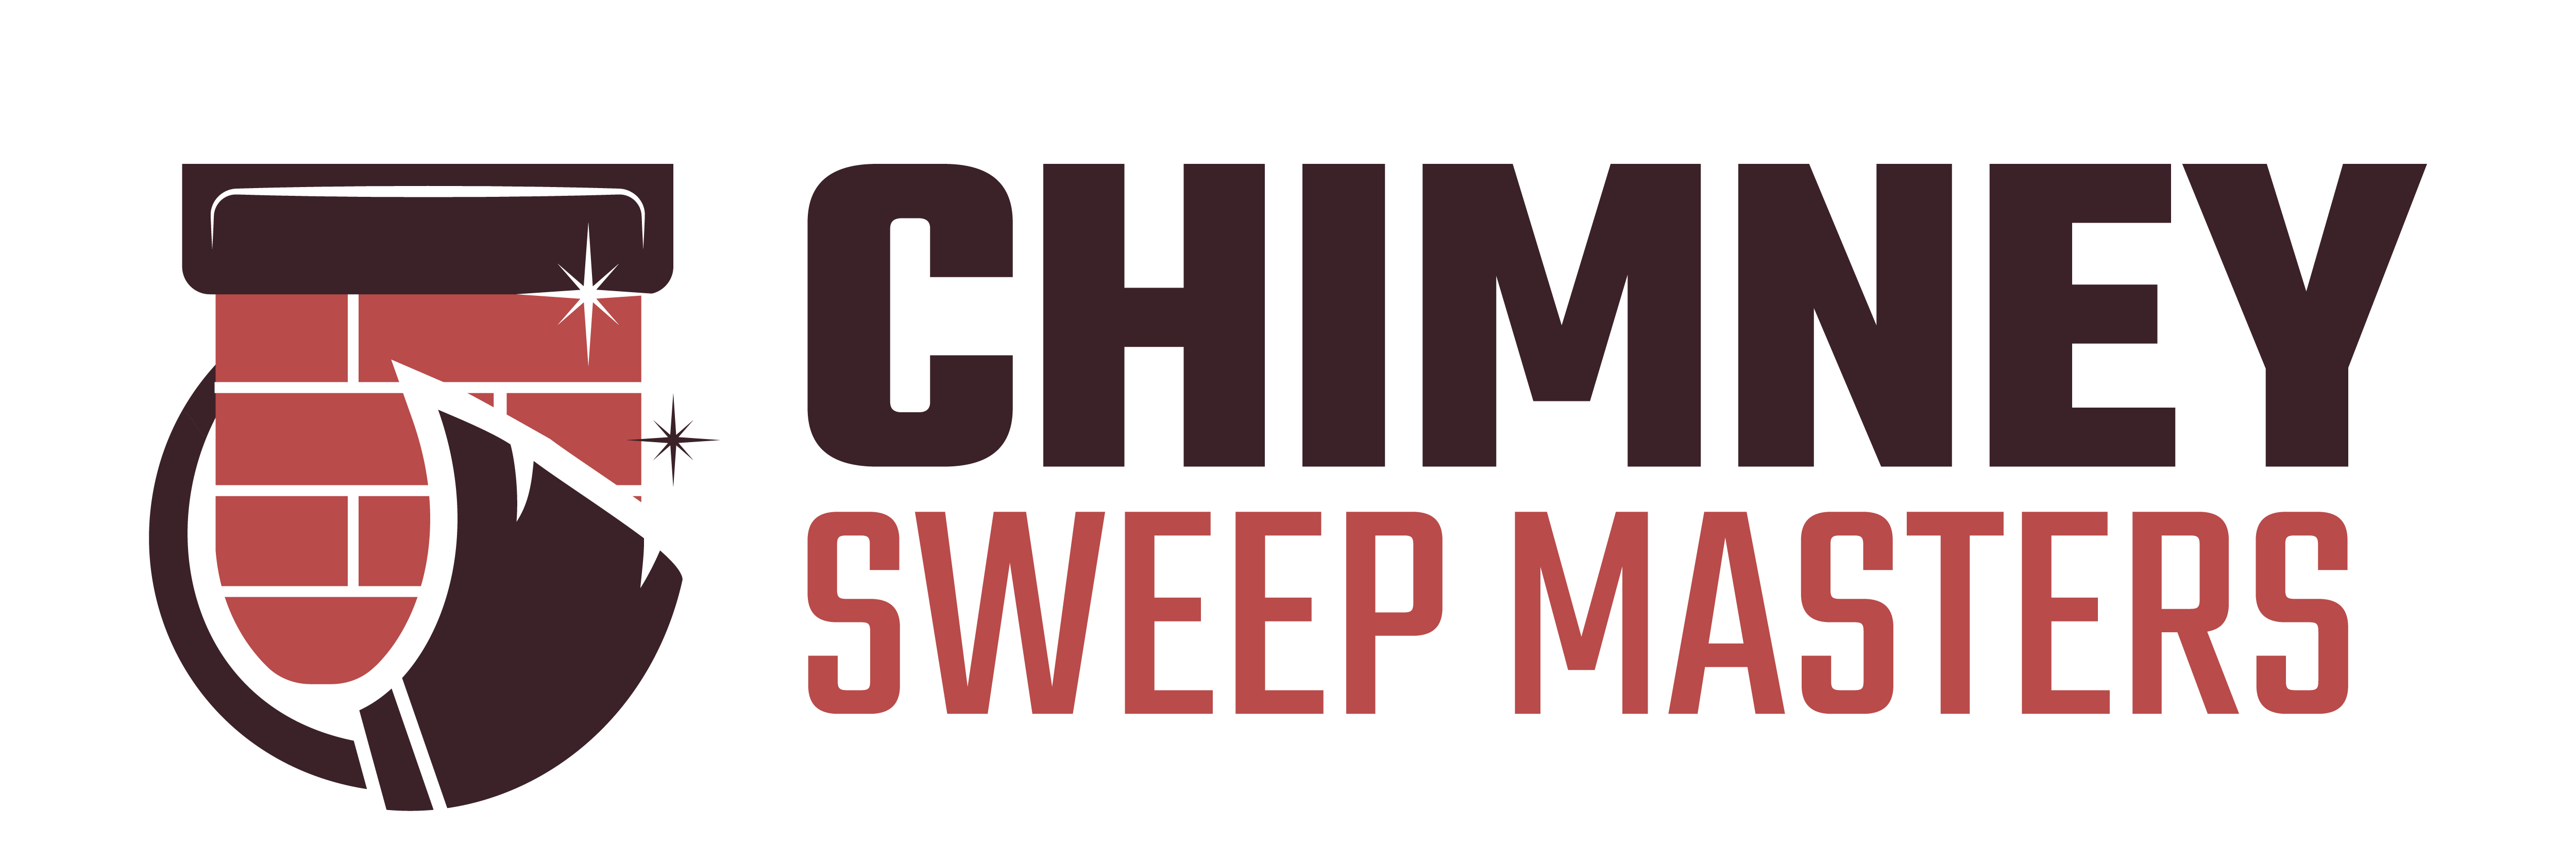 Chimney Sweep Masters Kramer Junction Logo